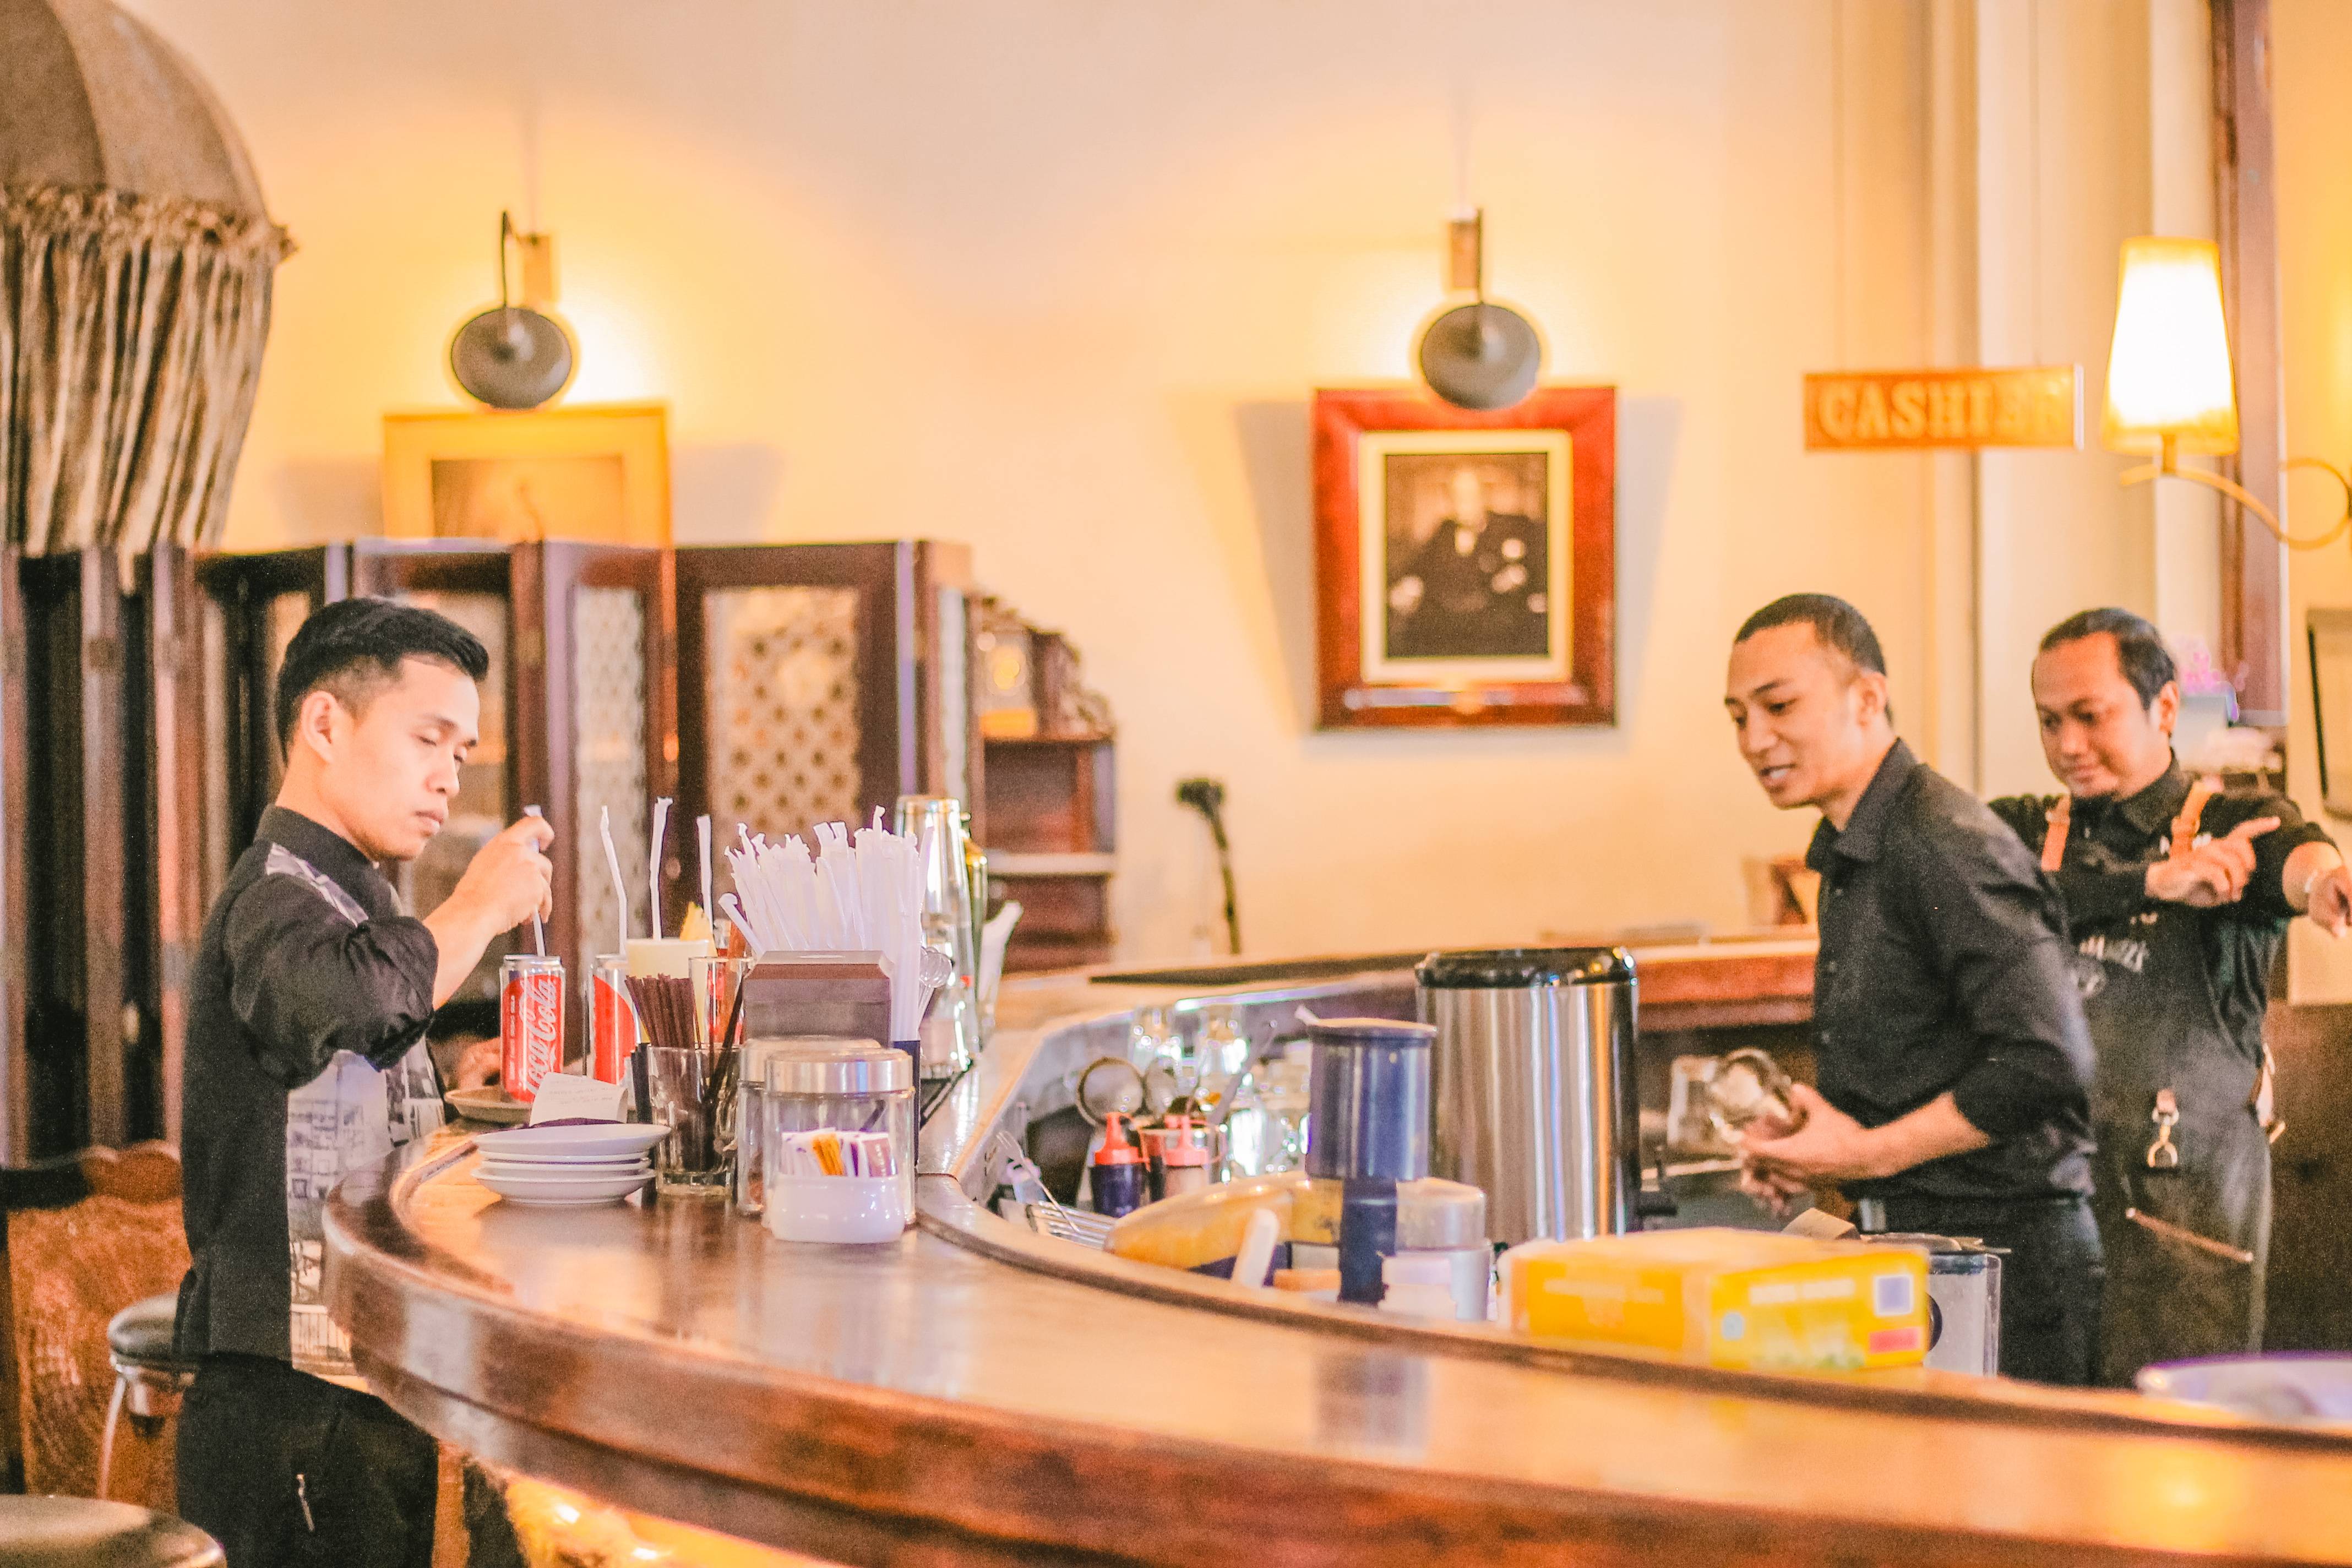 Cafe Batavia Jakarta (c) Willy Singgih/Travelingyuk